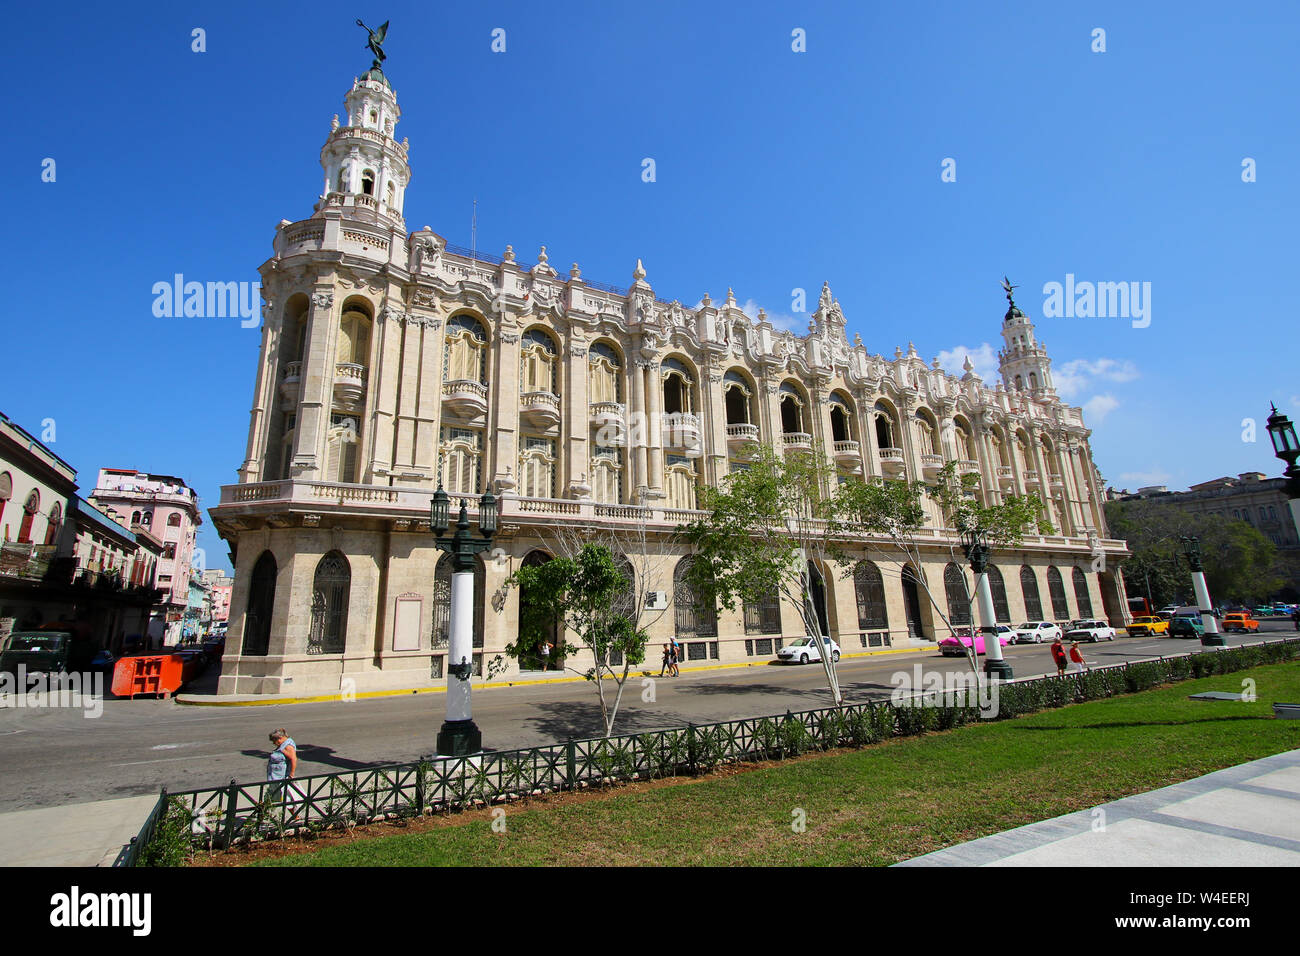 Gran Teatro de la Habana (Grand Theater of the Havana) Stock Photo